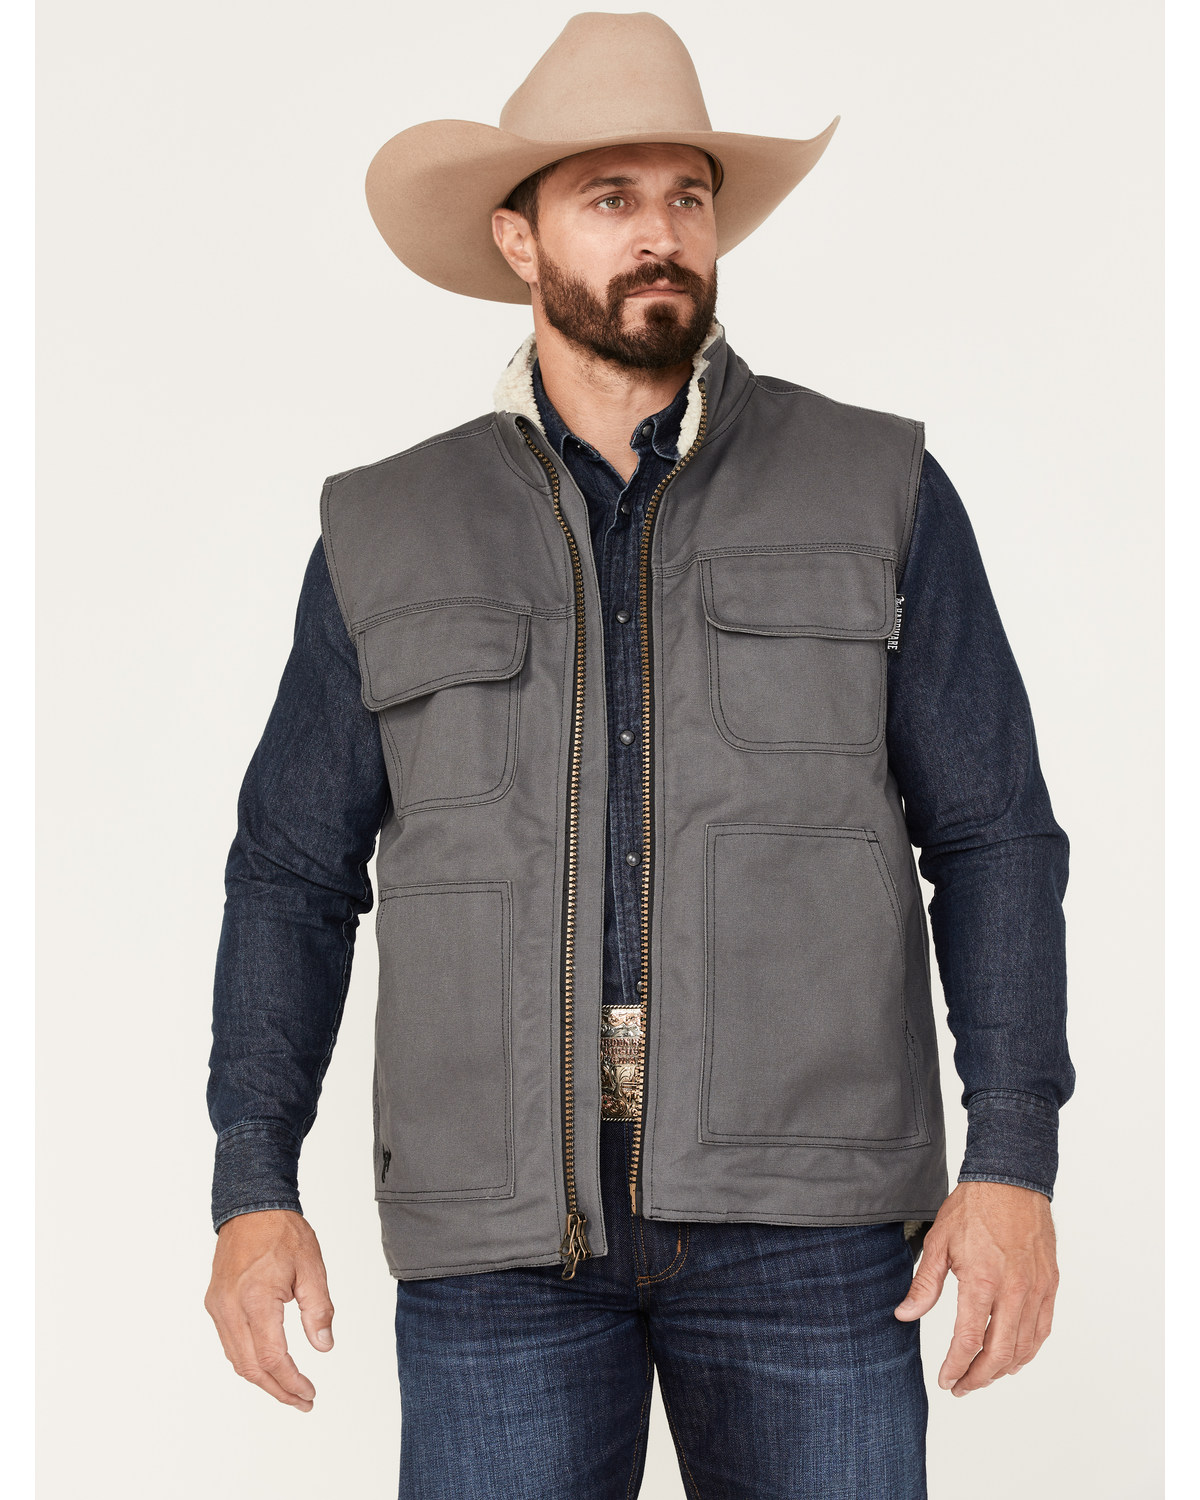 Cowboy Hardware Men's Ranch Canvas Berber Sherpa Lined Vest